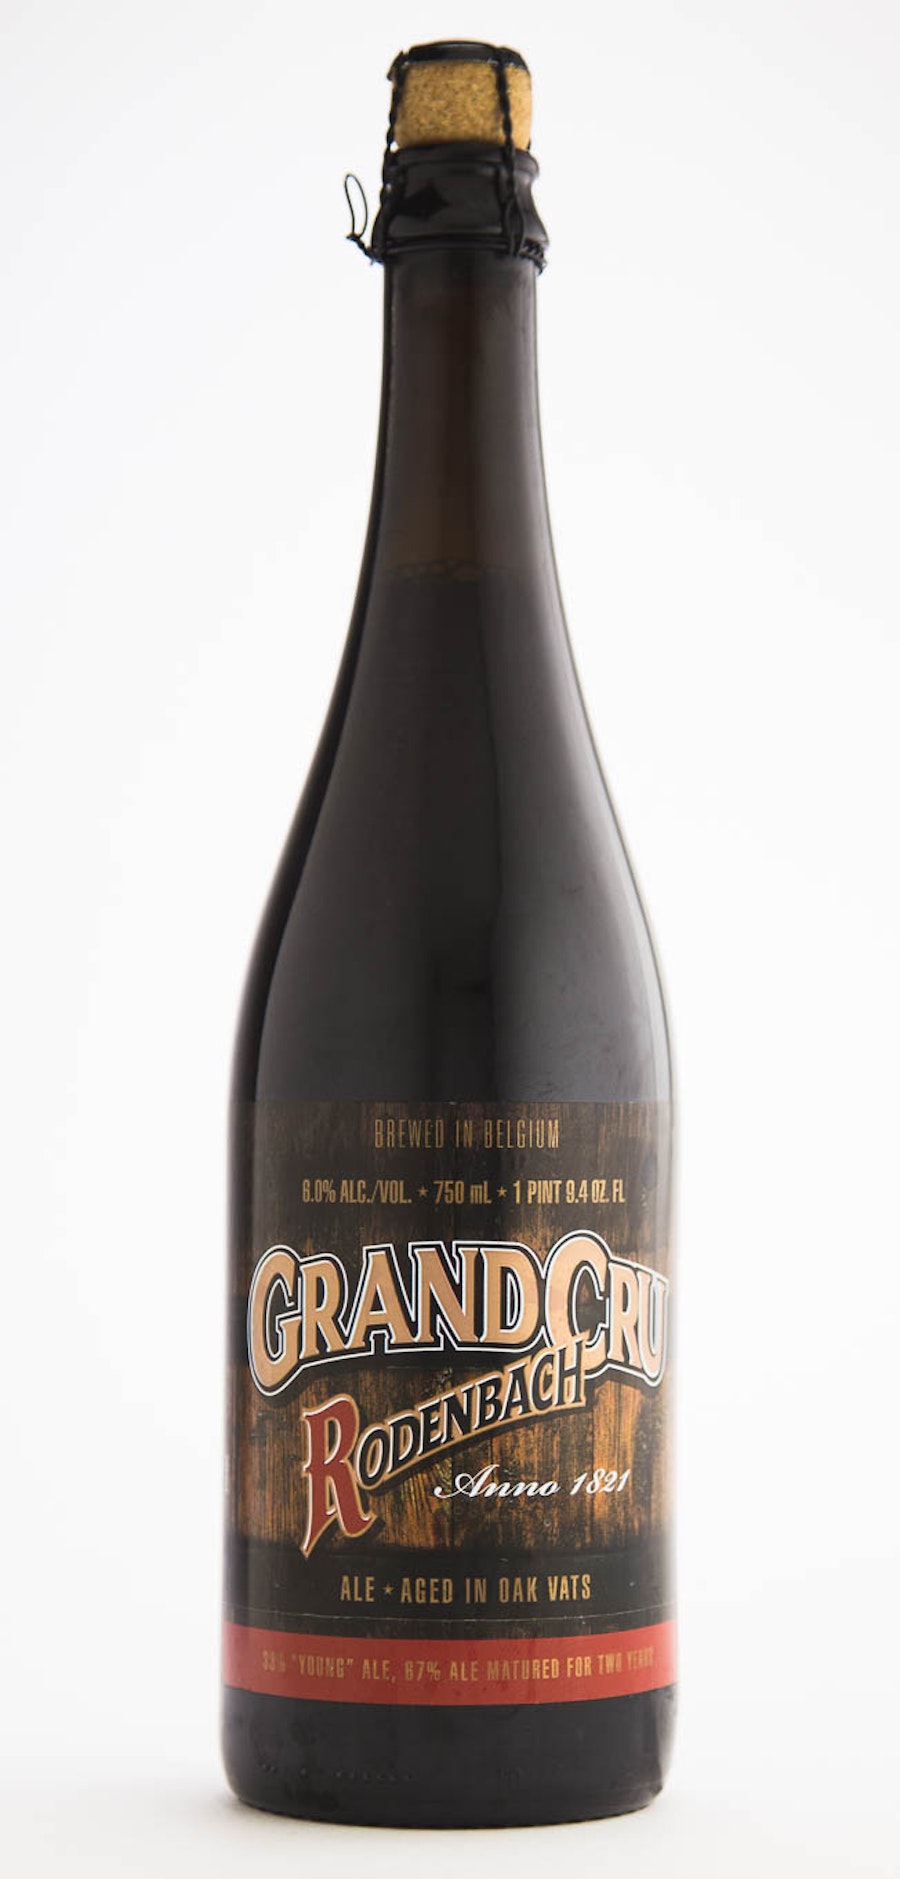 Rosendahl | Grand Cru Beer Glass, Set of 2